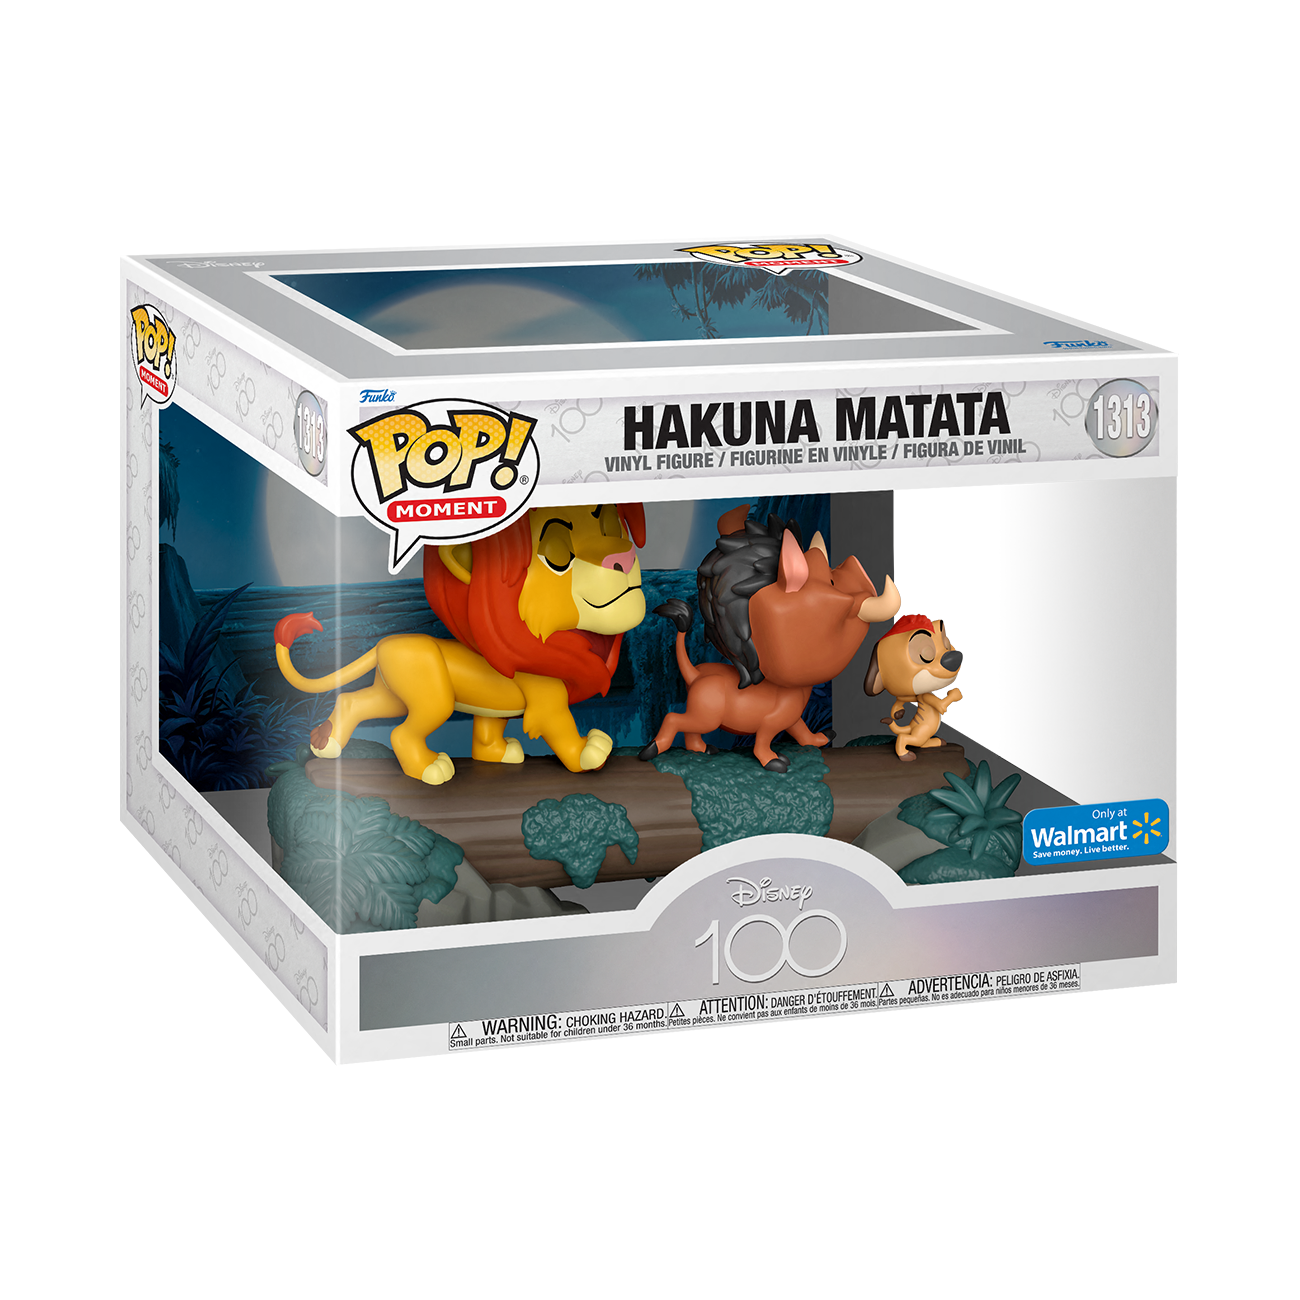 Funko Pop! Moments: Lion King - Hakuna Matata Vinyl Figure (Walmart Exclusive) - image 2 of 6